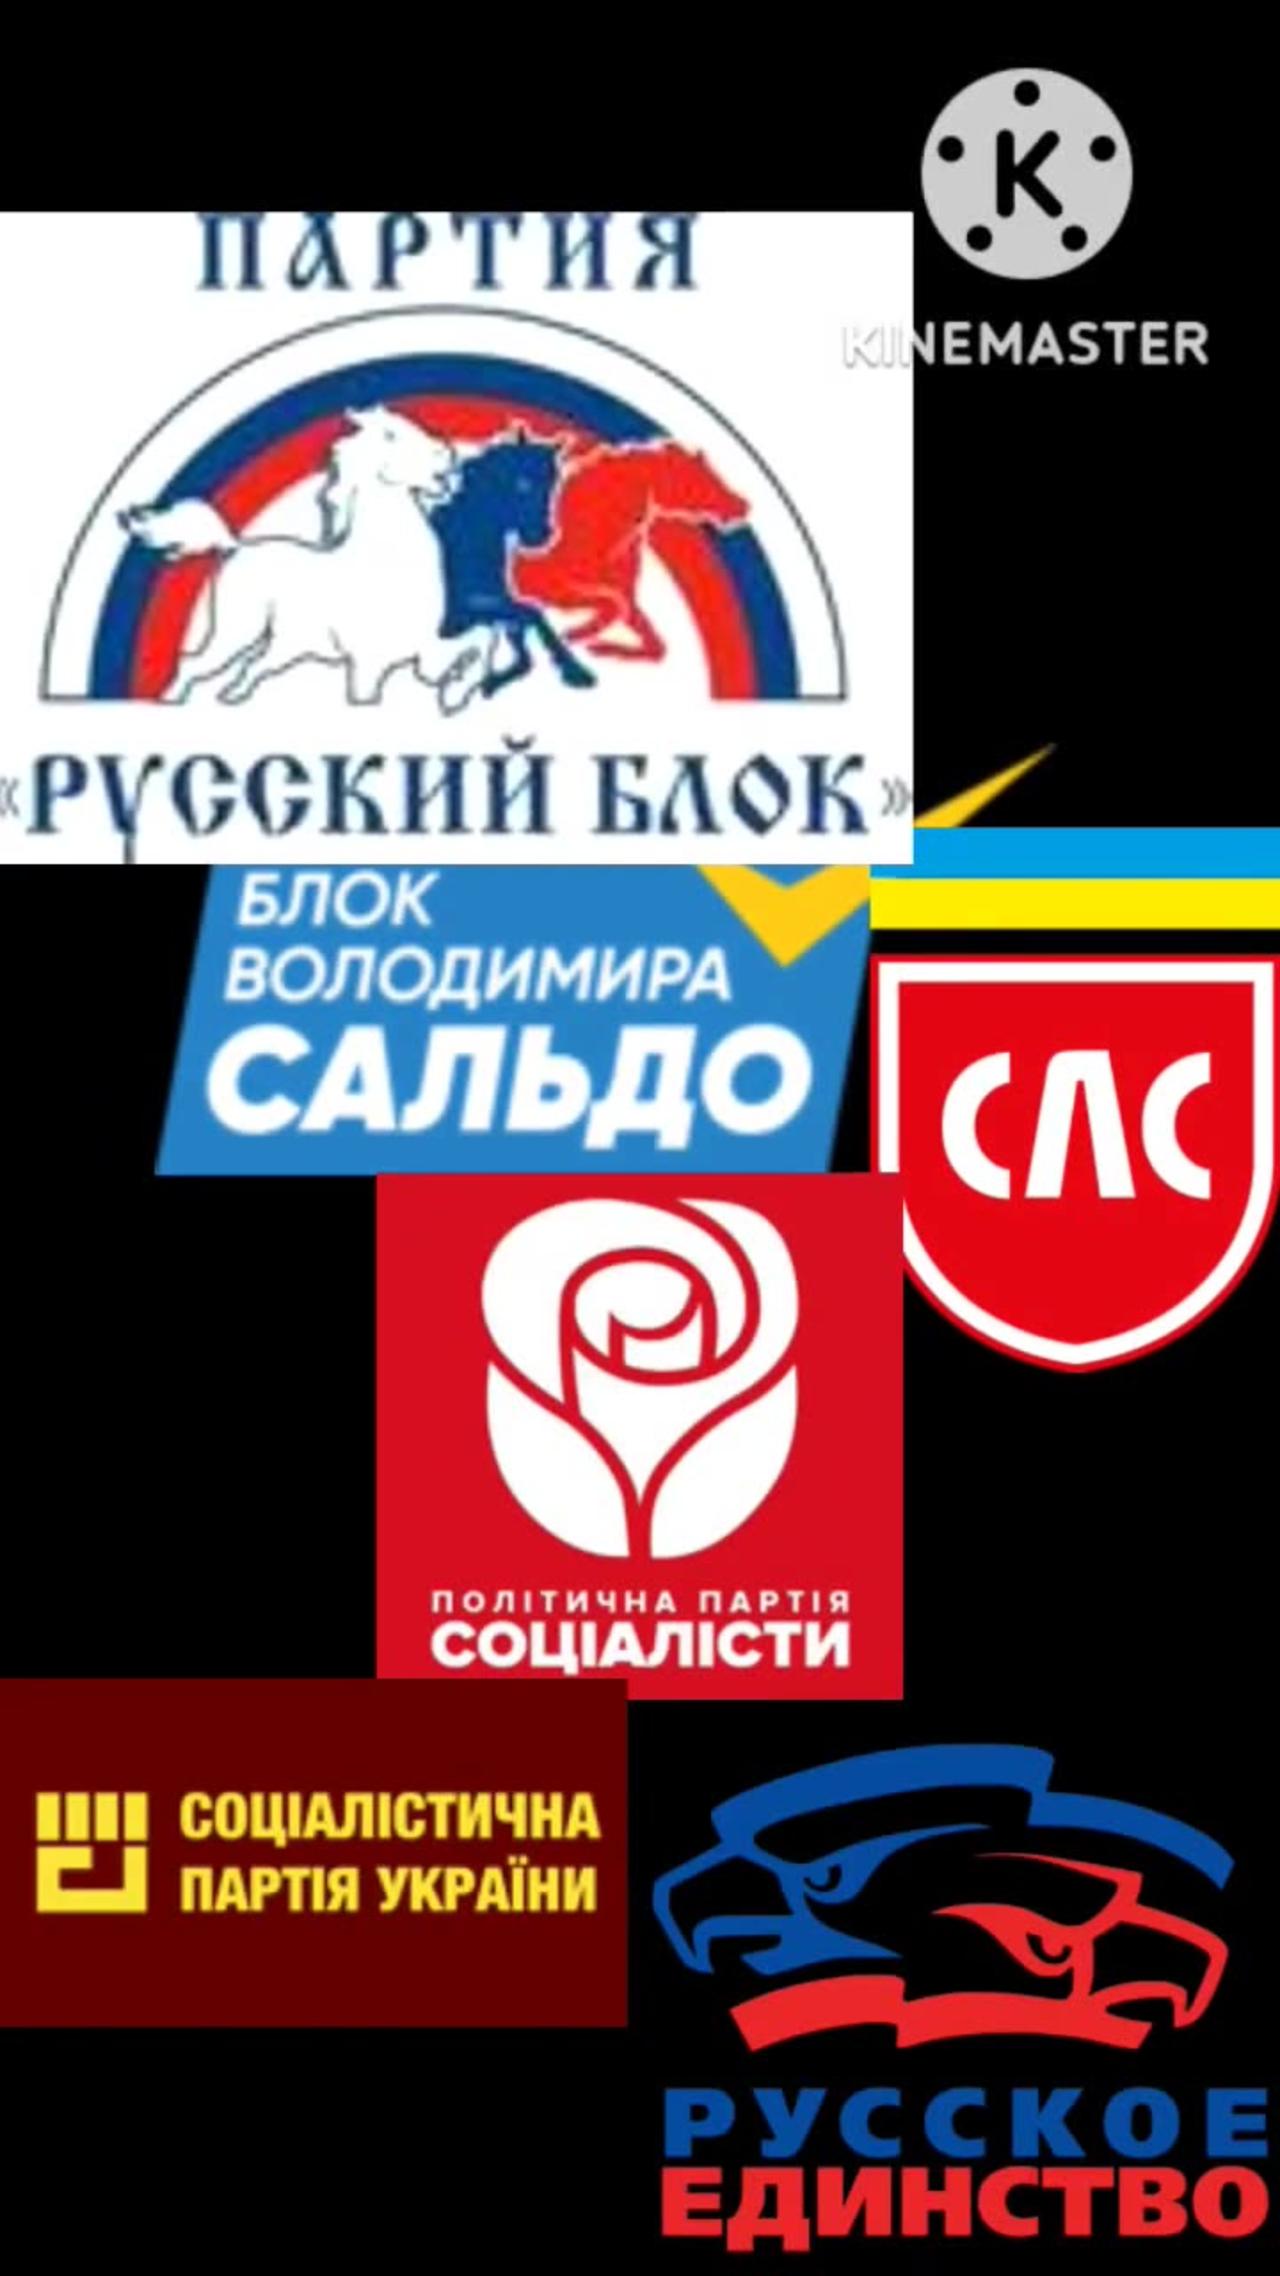 Political Parties Banned in Ukraine